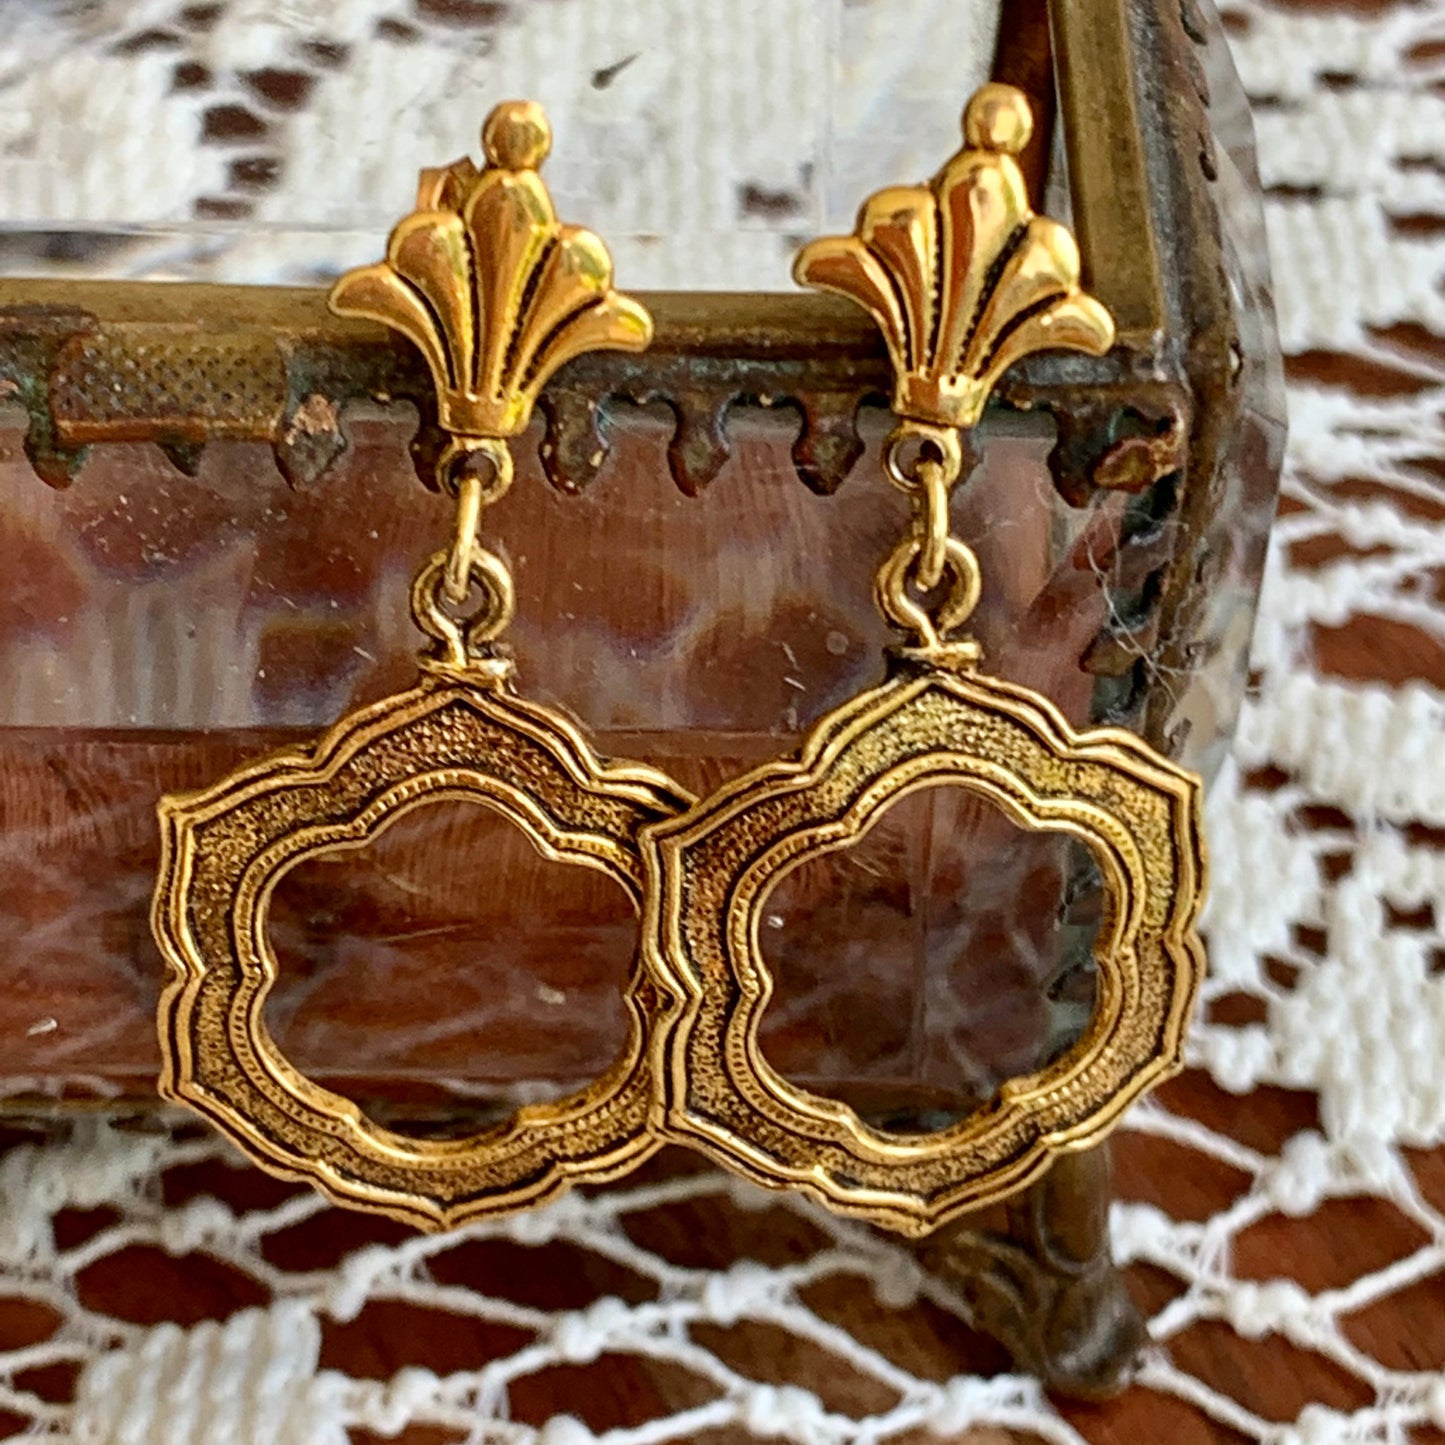 Vintage Dangling Gold Tone Modern Looking Floral Pierced Earrings 14K Gold Posts